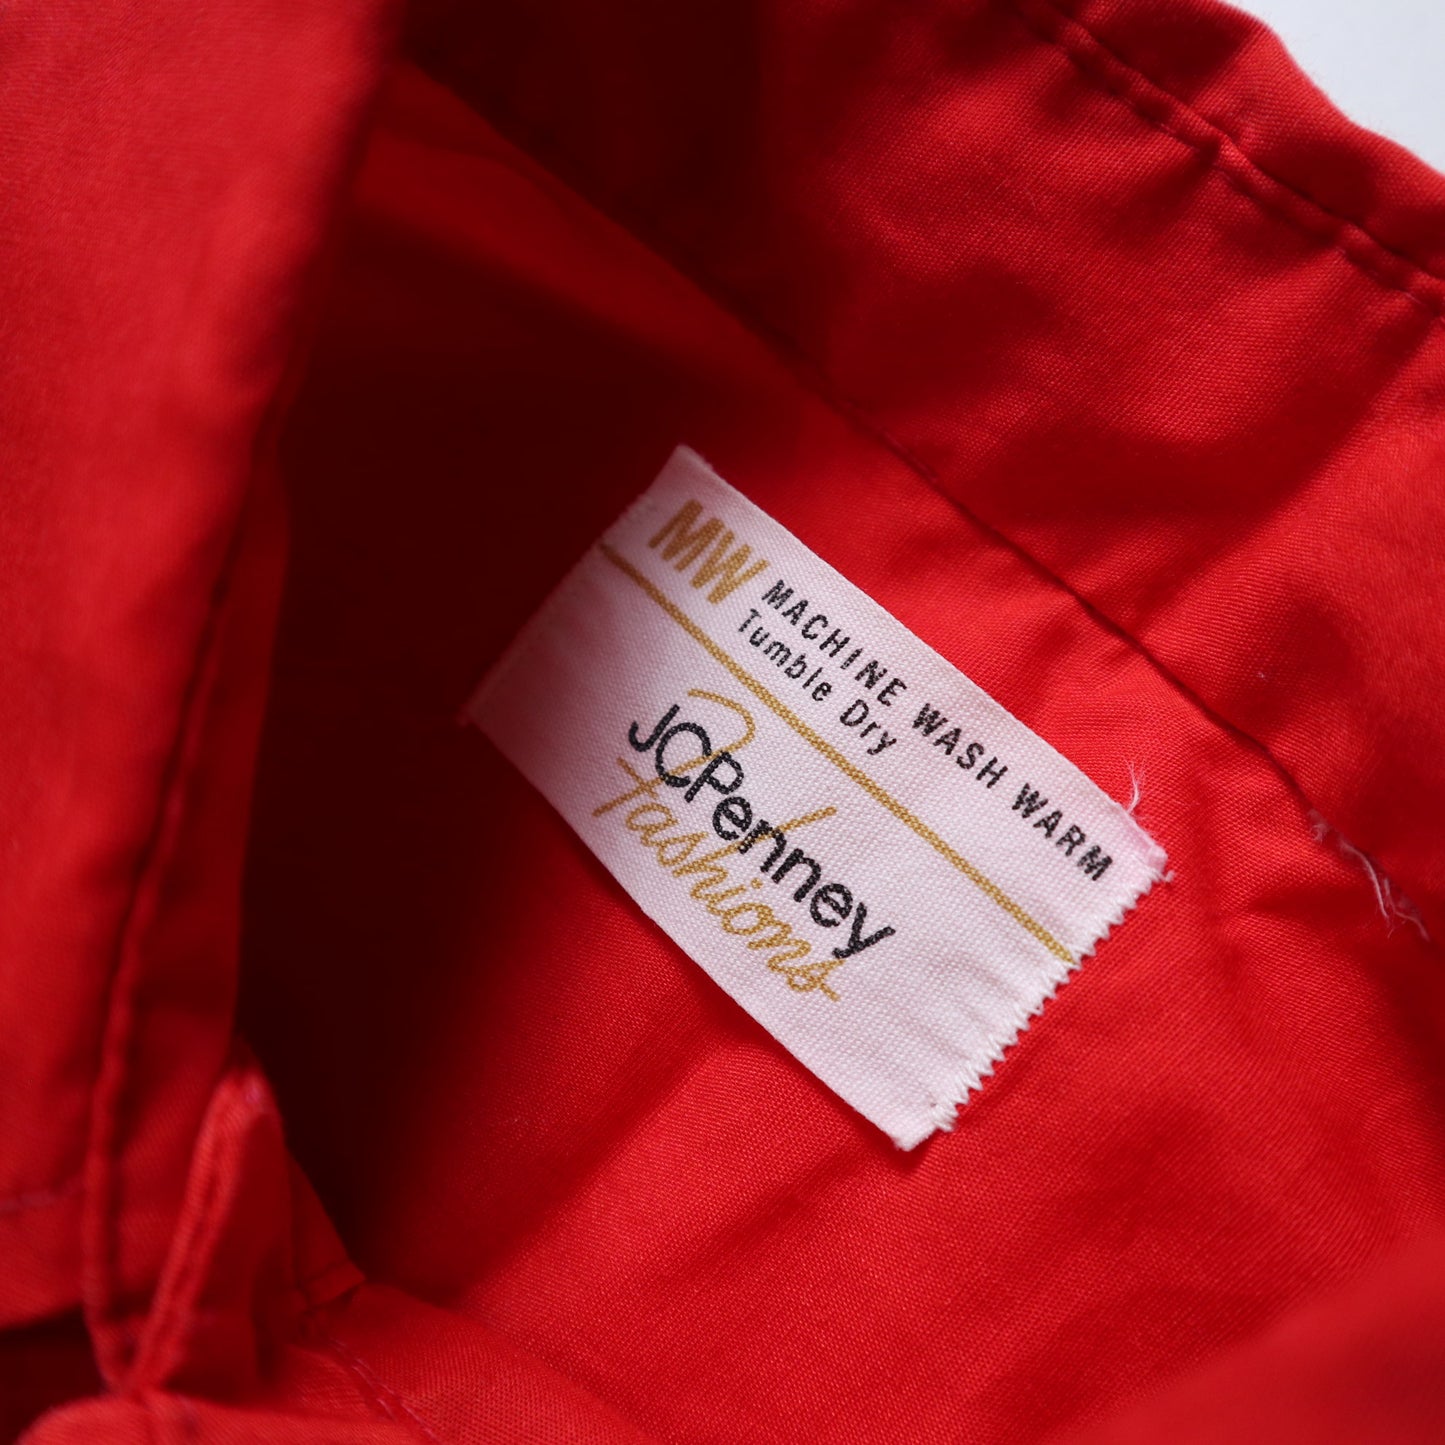 1970s JCPENNEY red arrow collar shirt